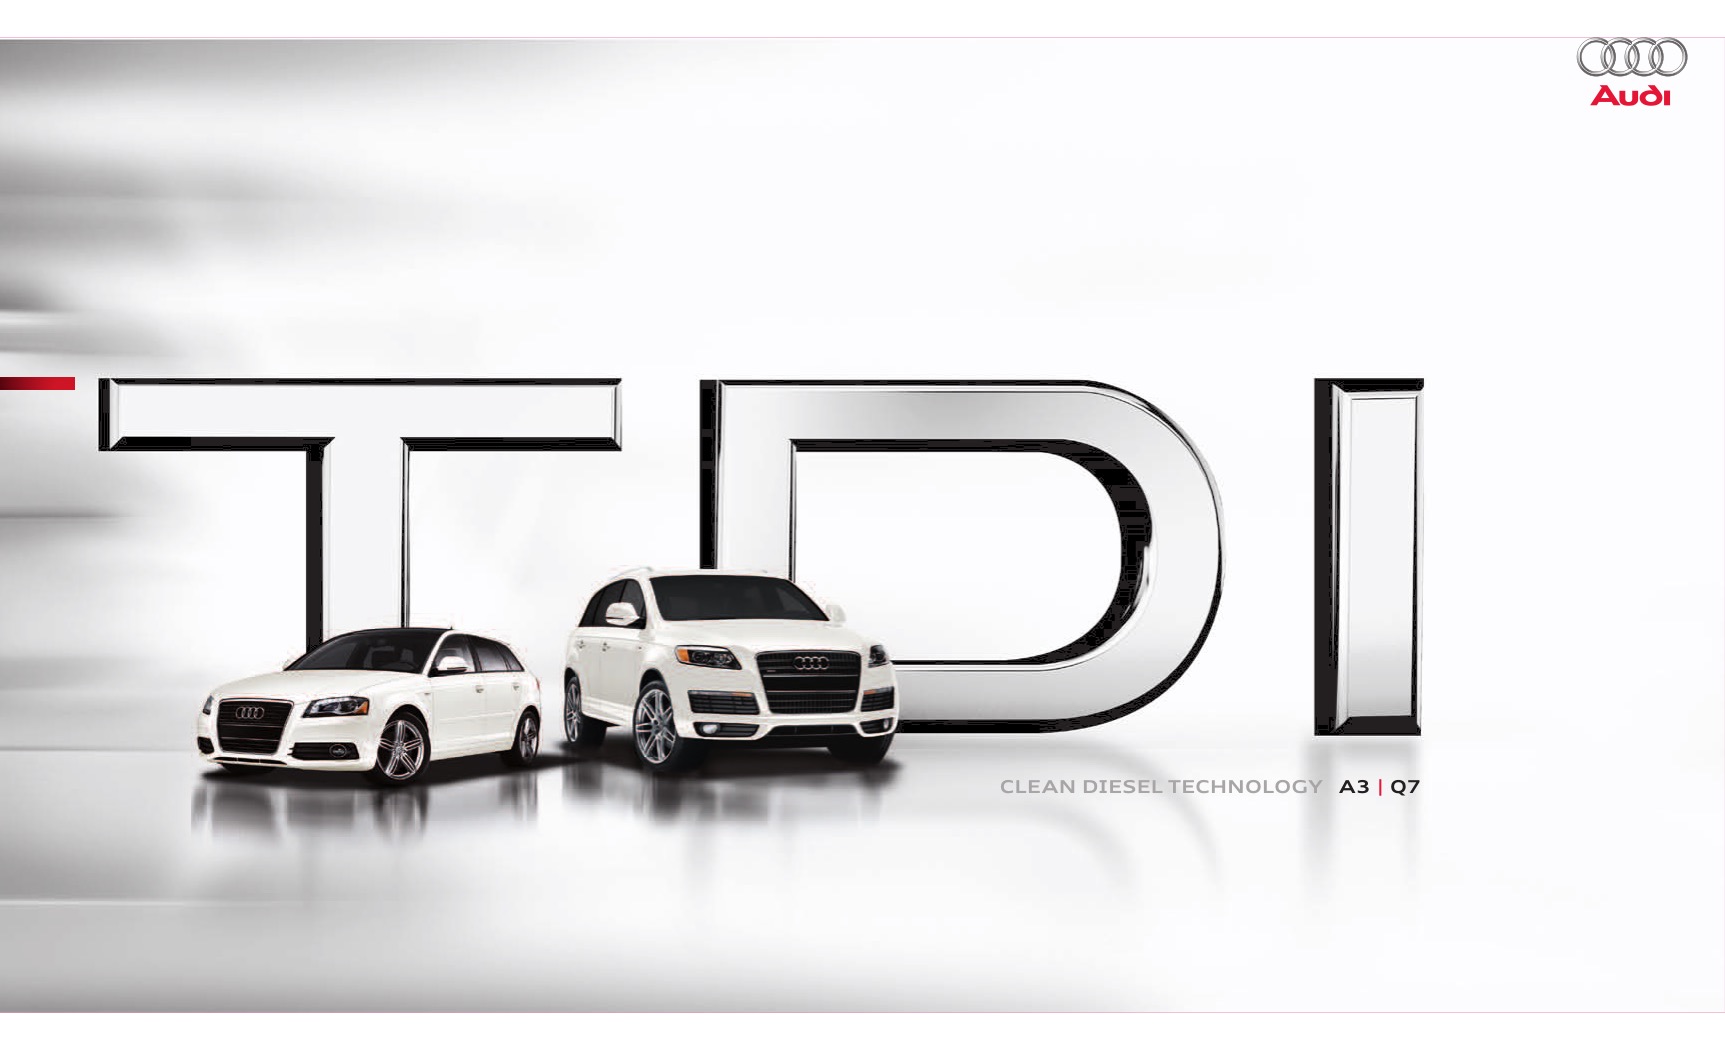 2007 Audi TDi Brochure